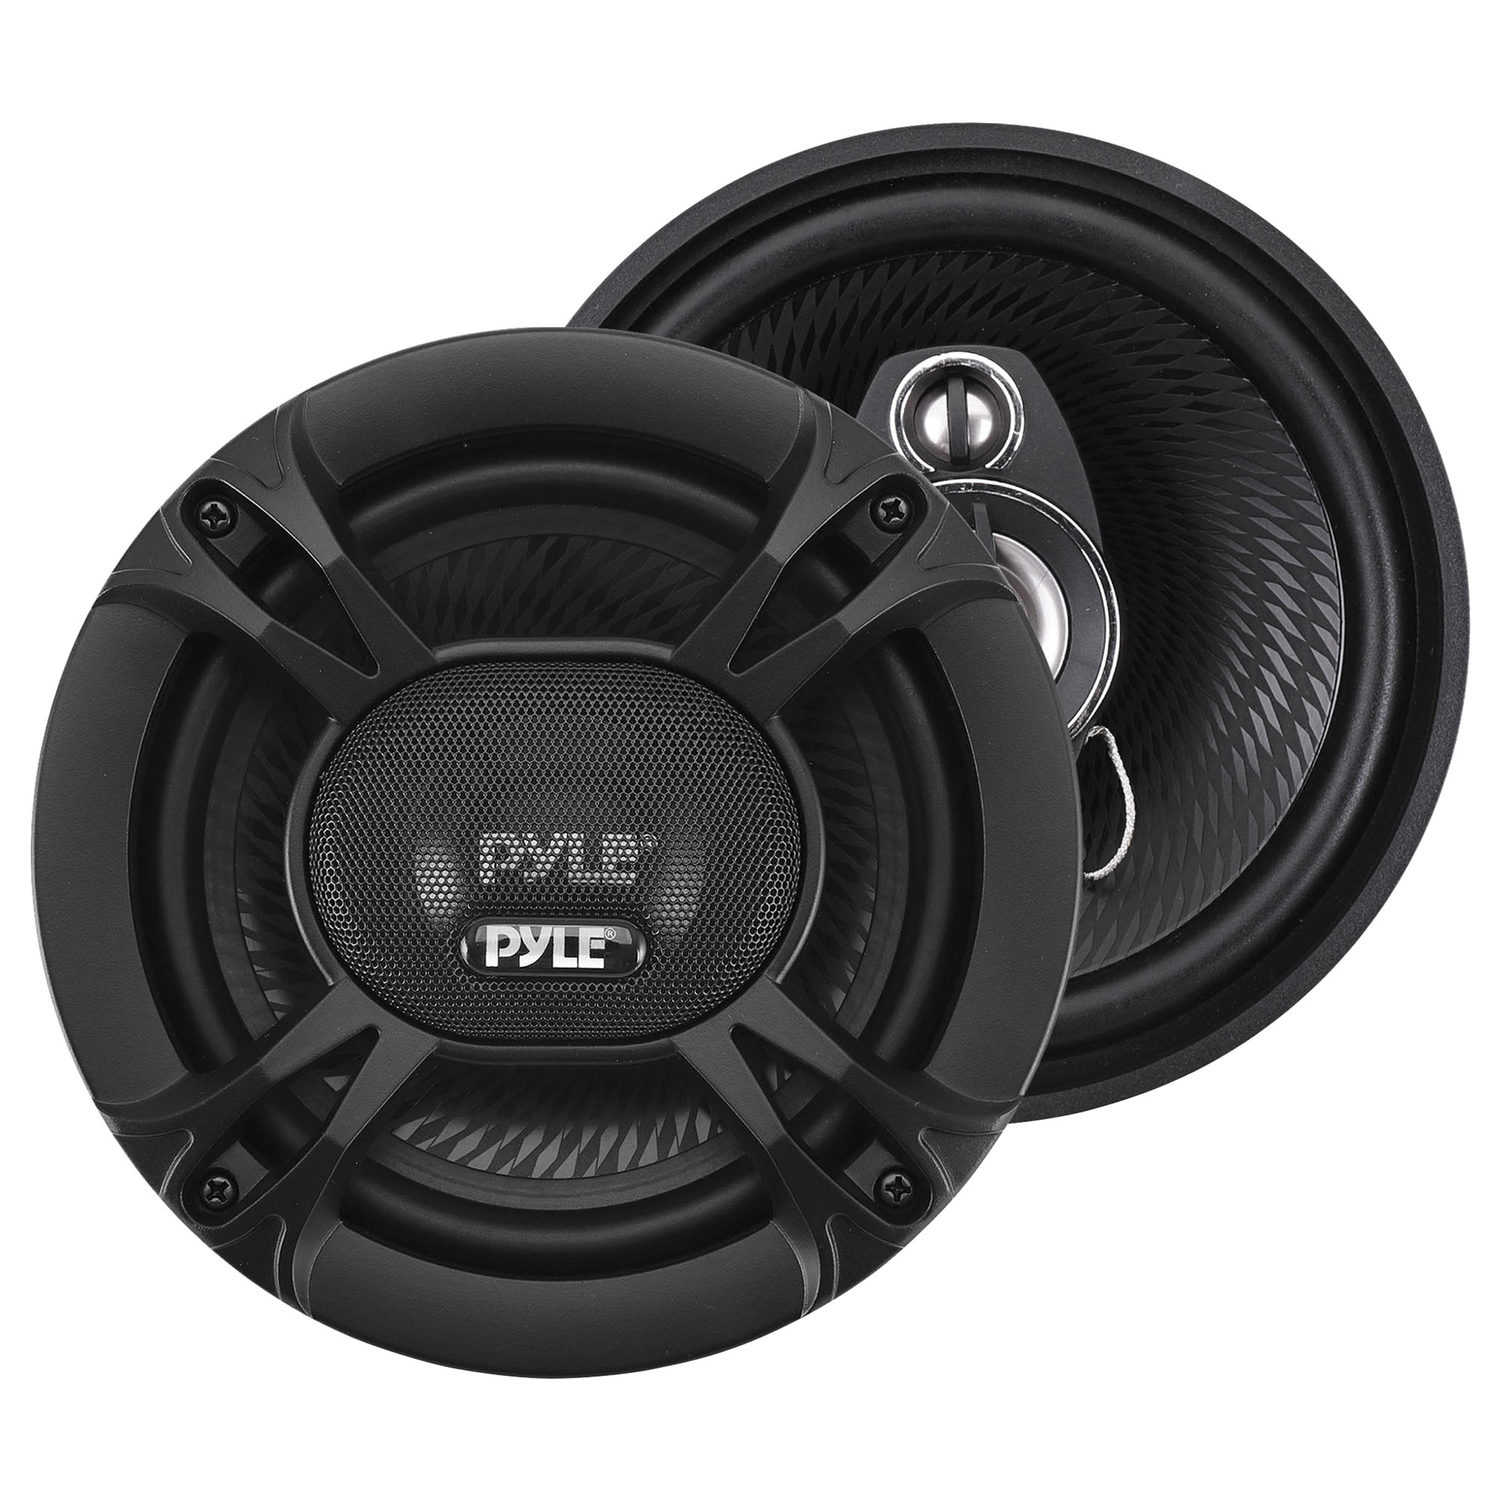 Pyle 2-Way Universal Car Stereo Speakers-120W 3.5 Inch Coaxial Loud Pro Audio Car Speaker (Black) - image 1 of 7